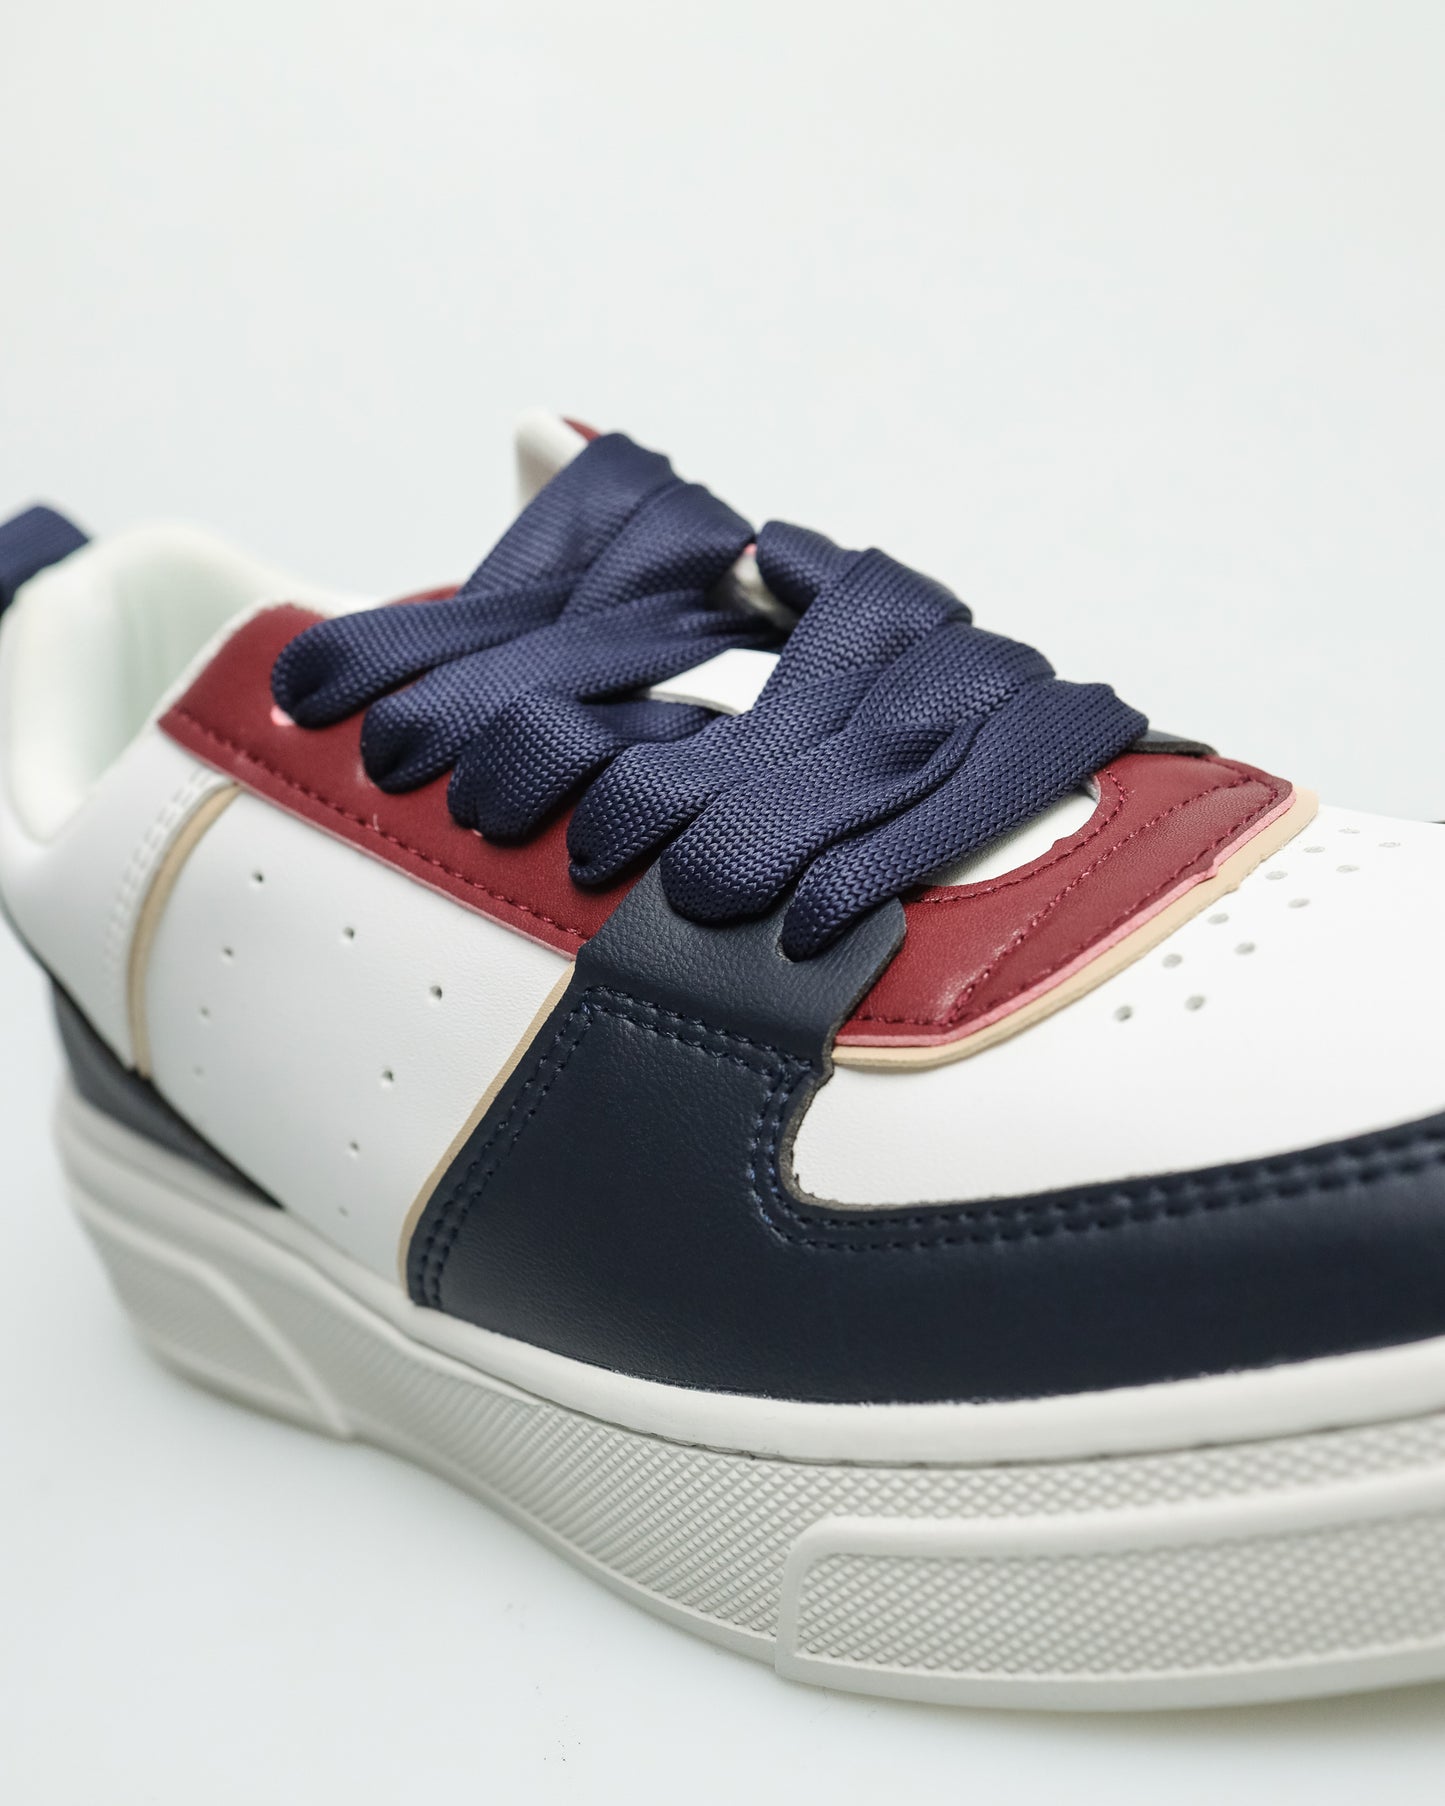 Tomaz TY017 Men's Sneakers (Navy/White/Red)